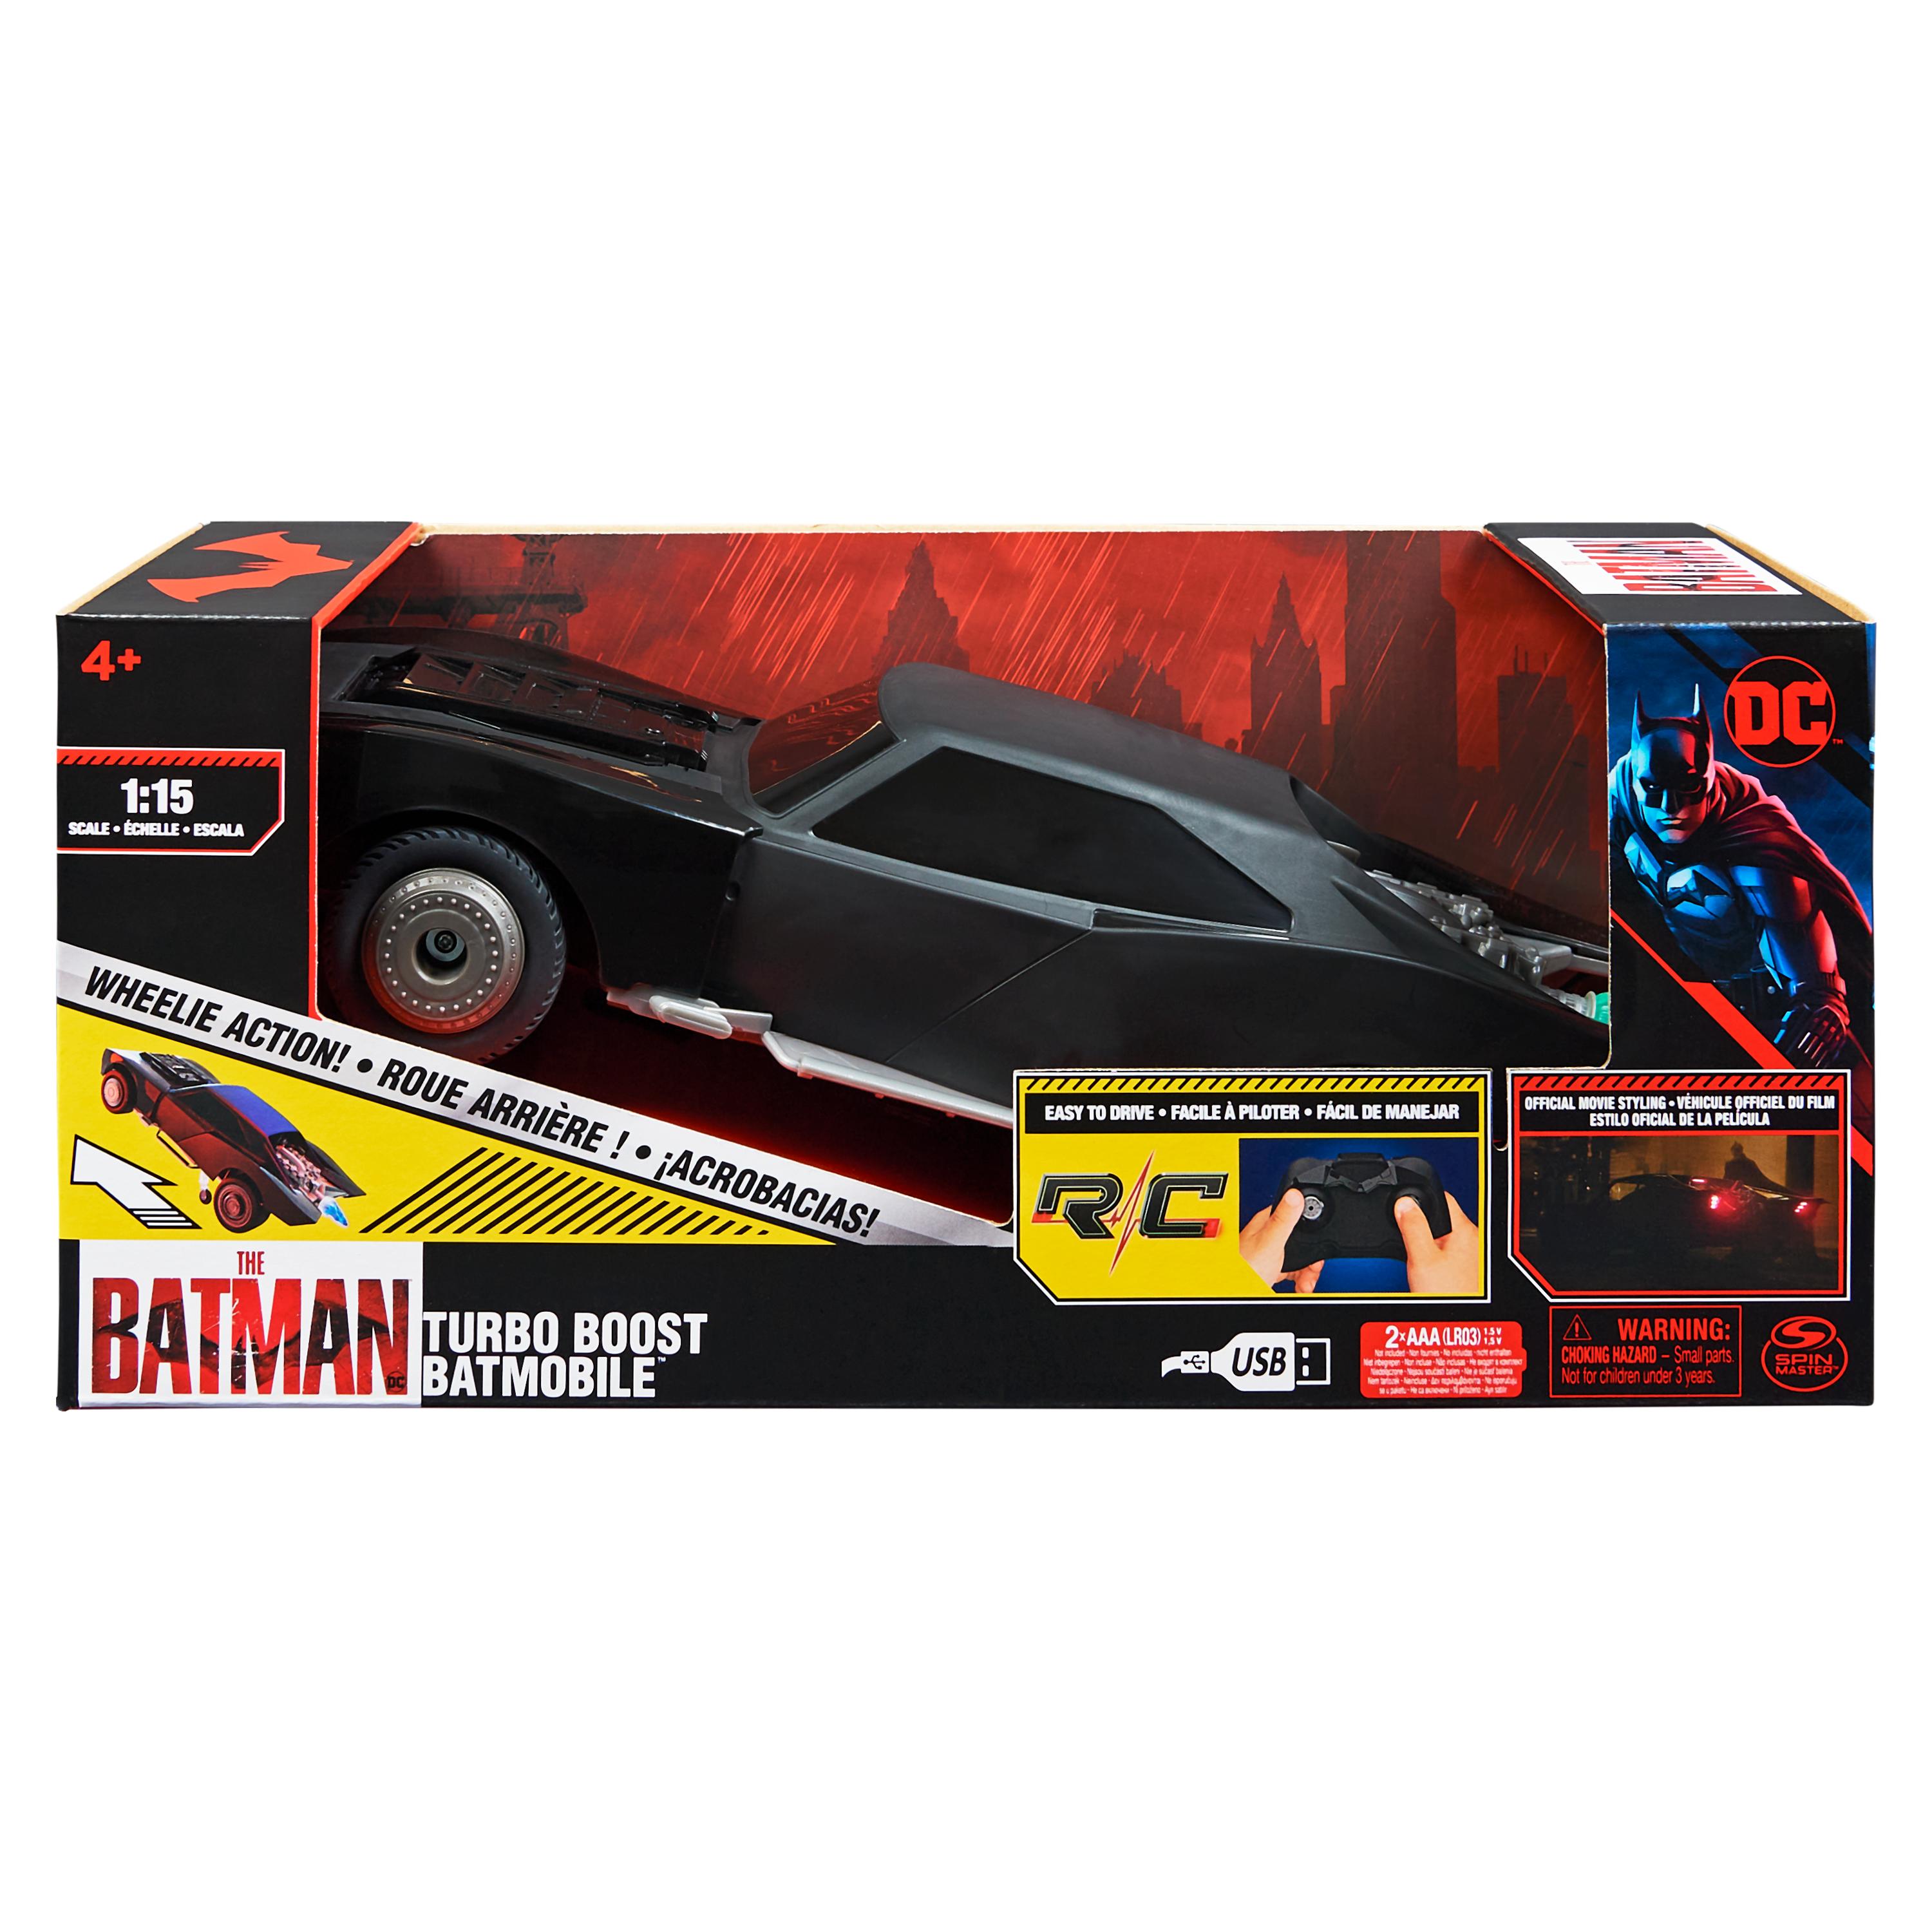 Turbo Boost Batmobile 7